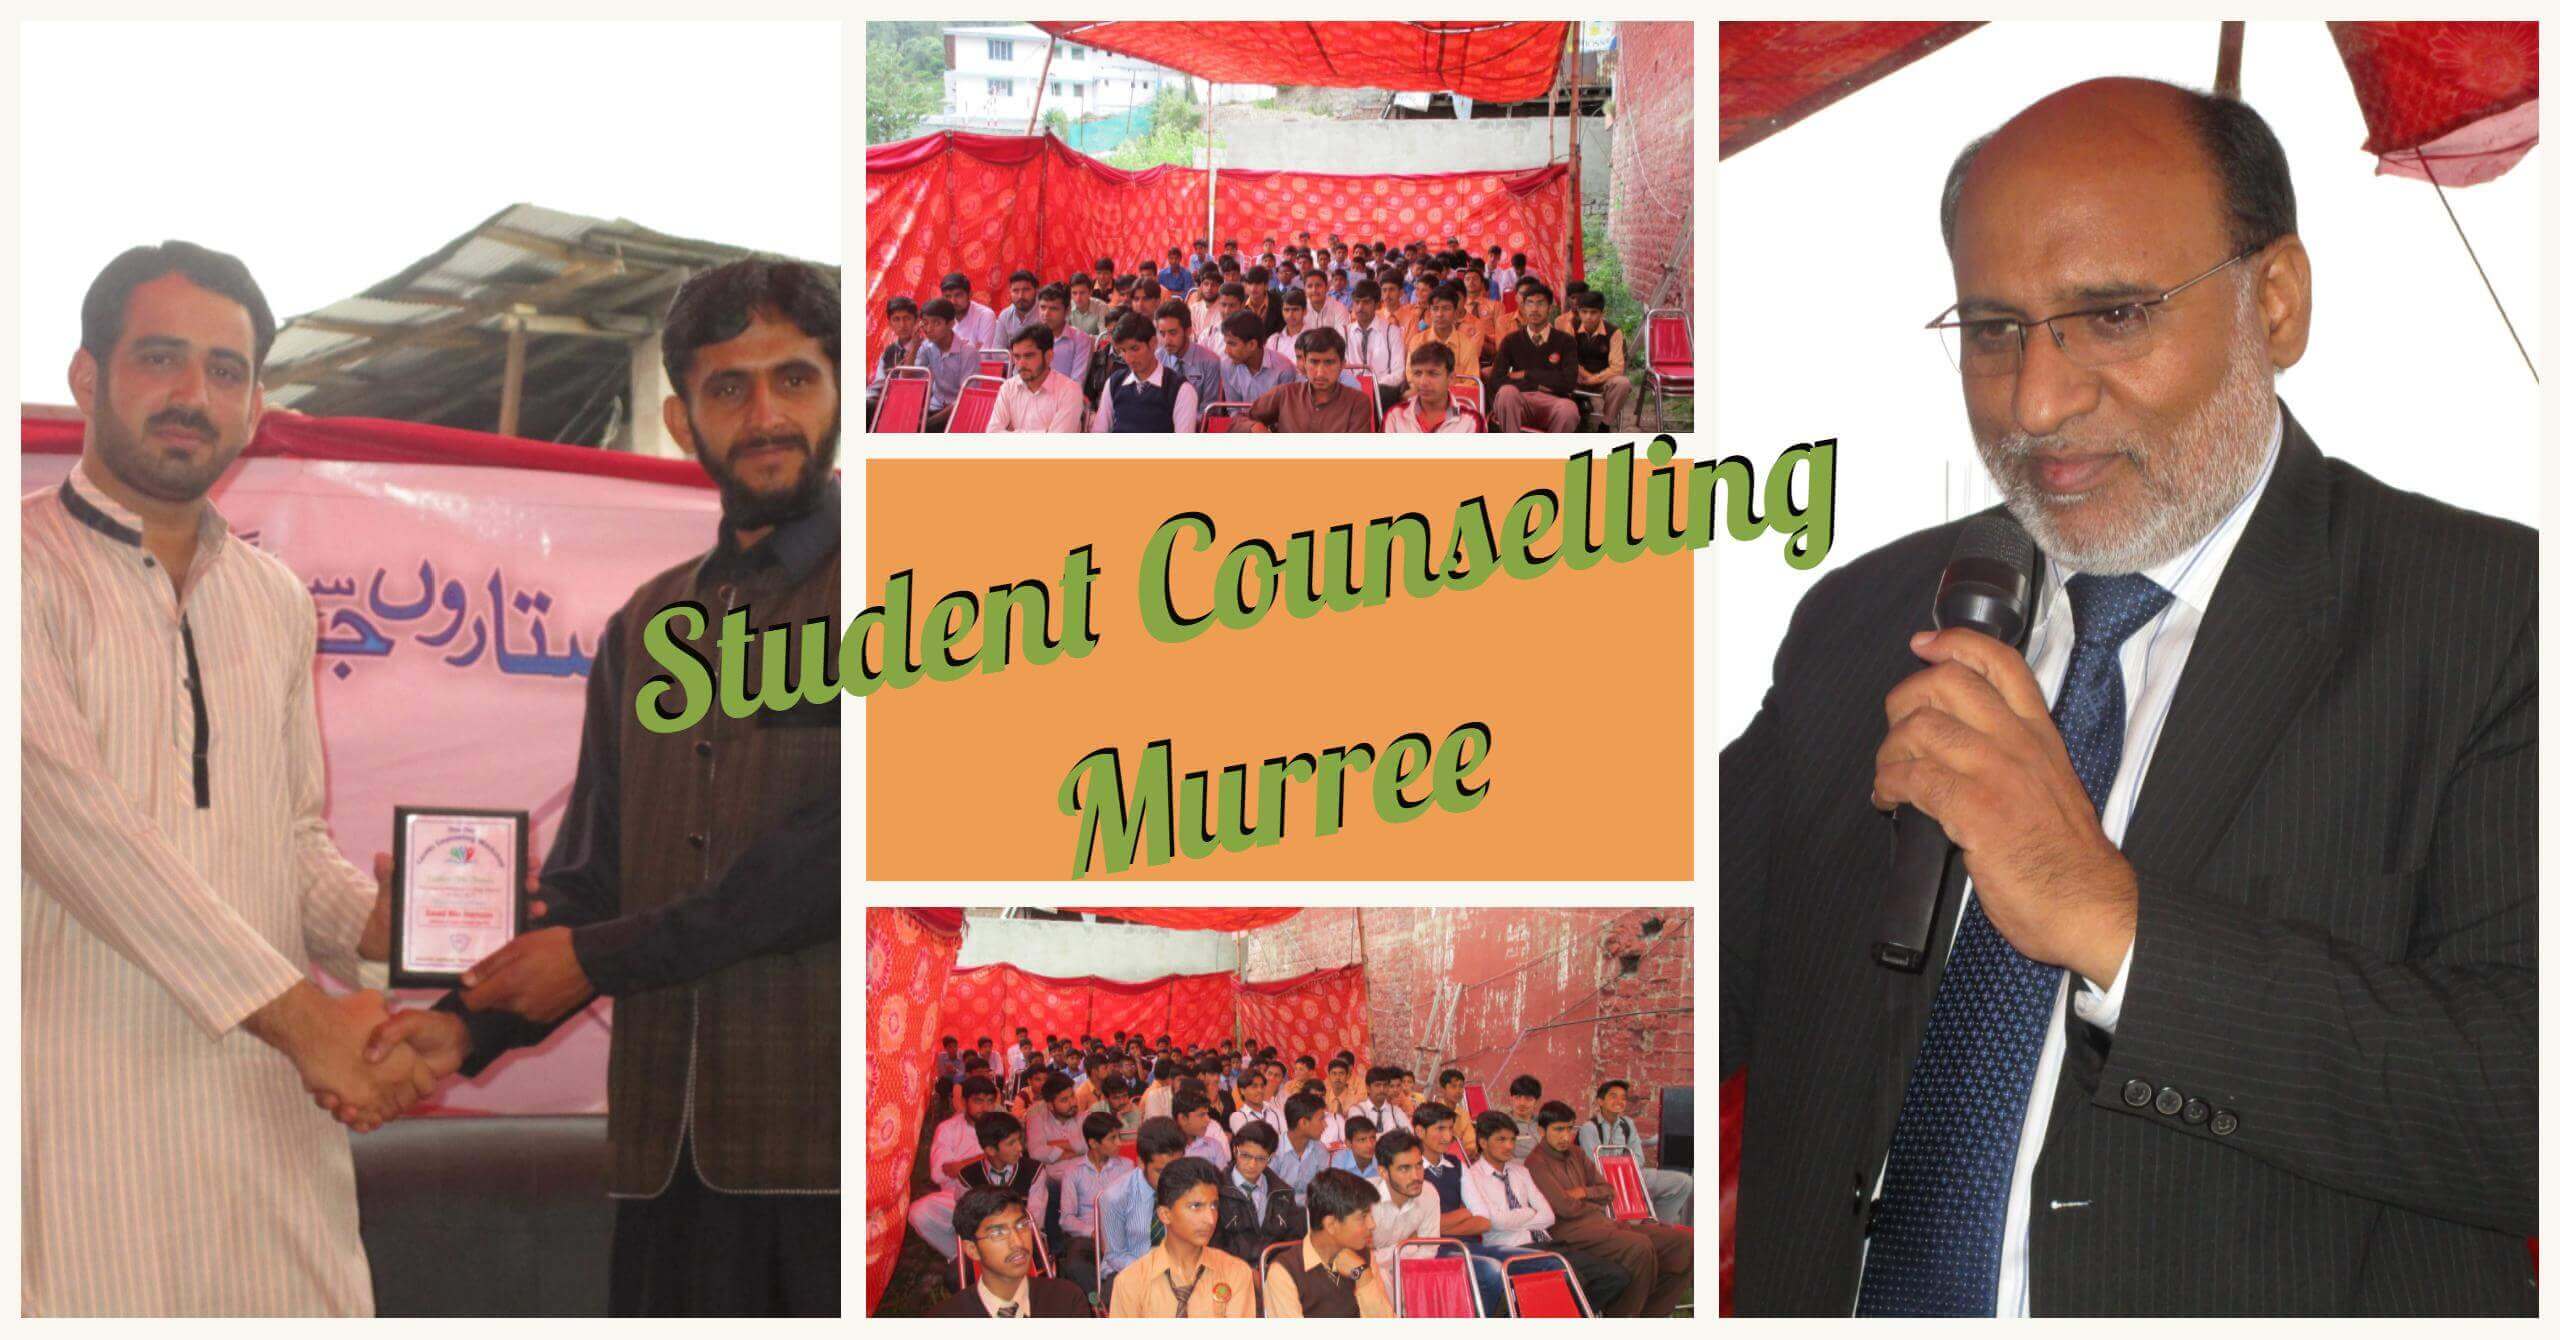 Seminar on Career Counseling in Murree